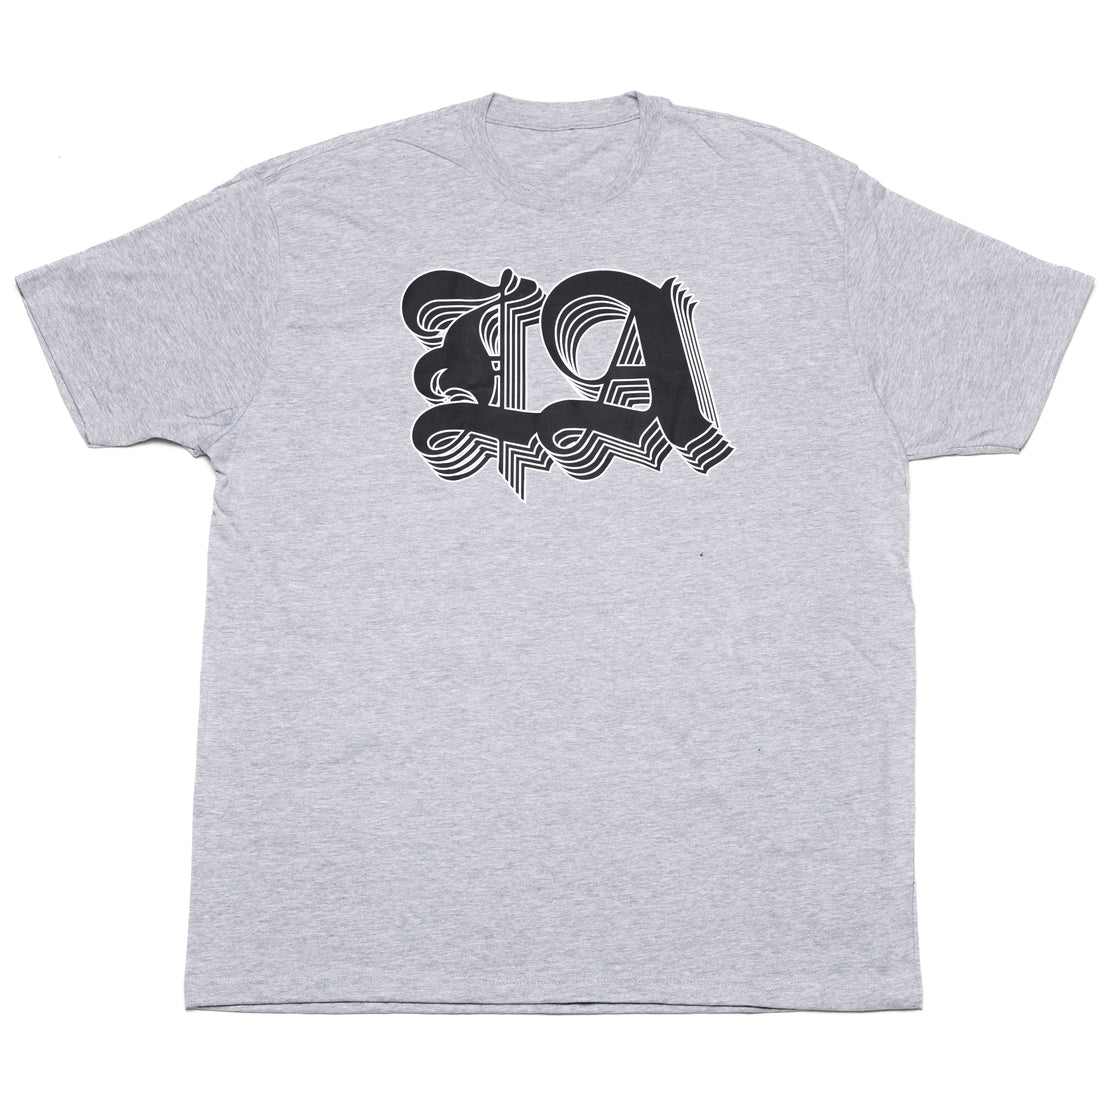 Greetings from LA Logo T-Shirt